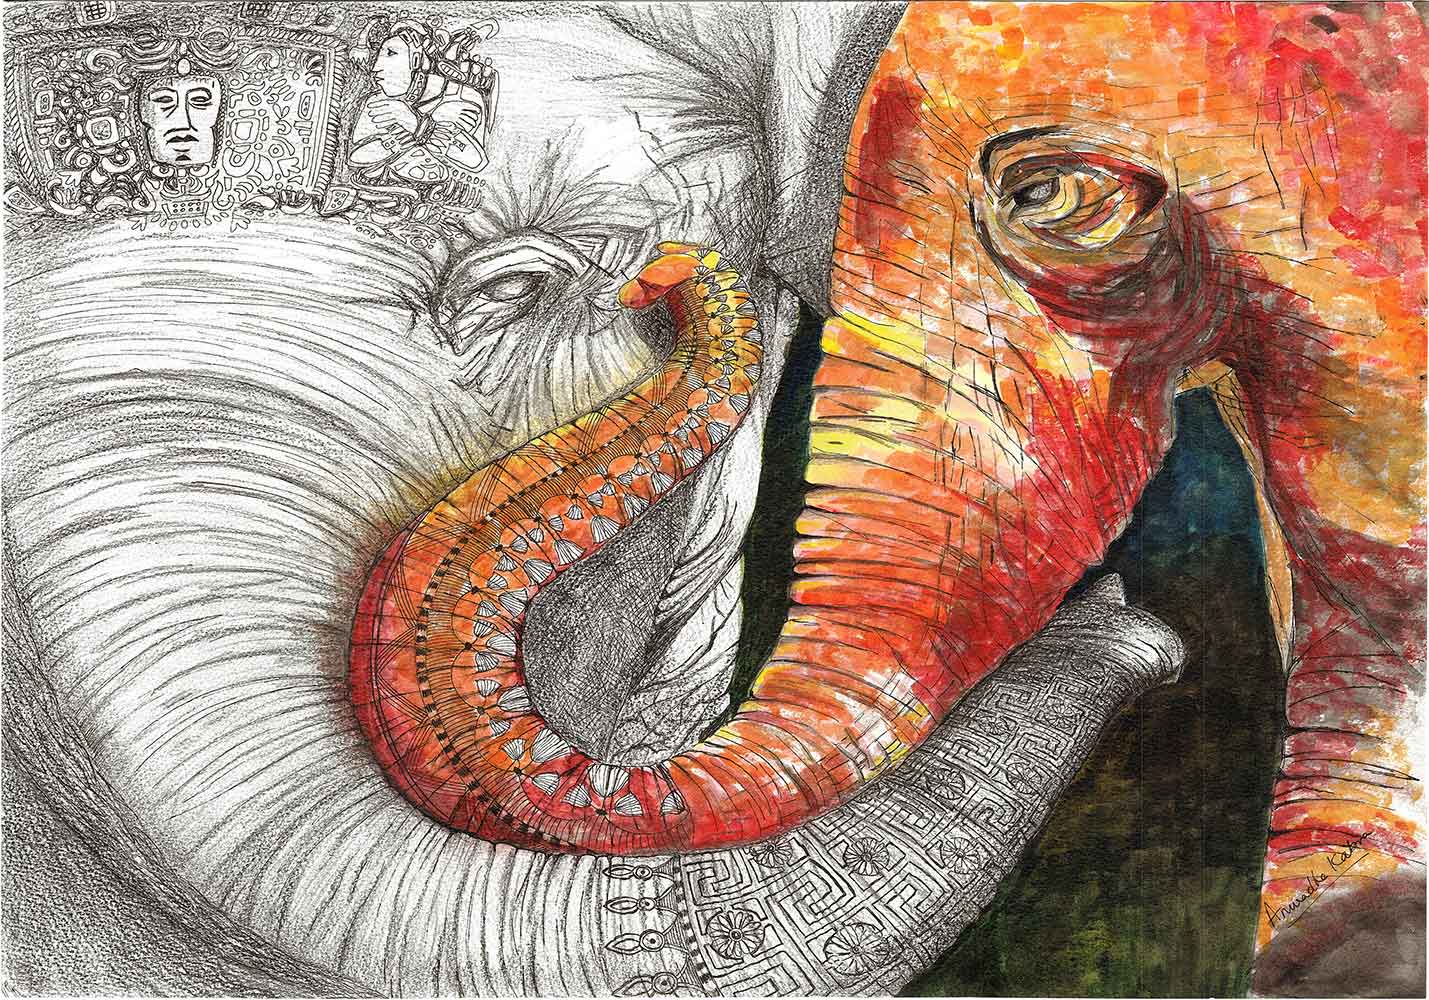 Buy painting online Singapore Serendipity Elephants Anuradha Kabra India Exquisite Art